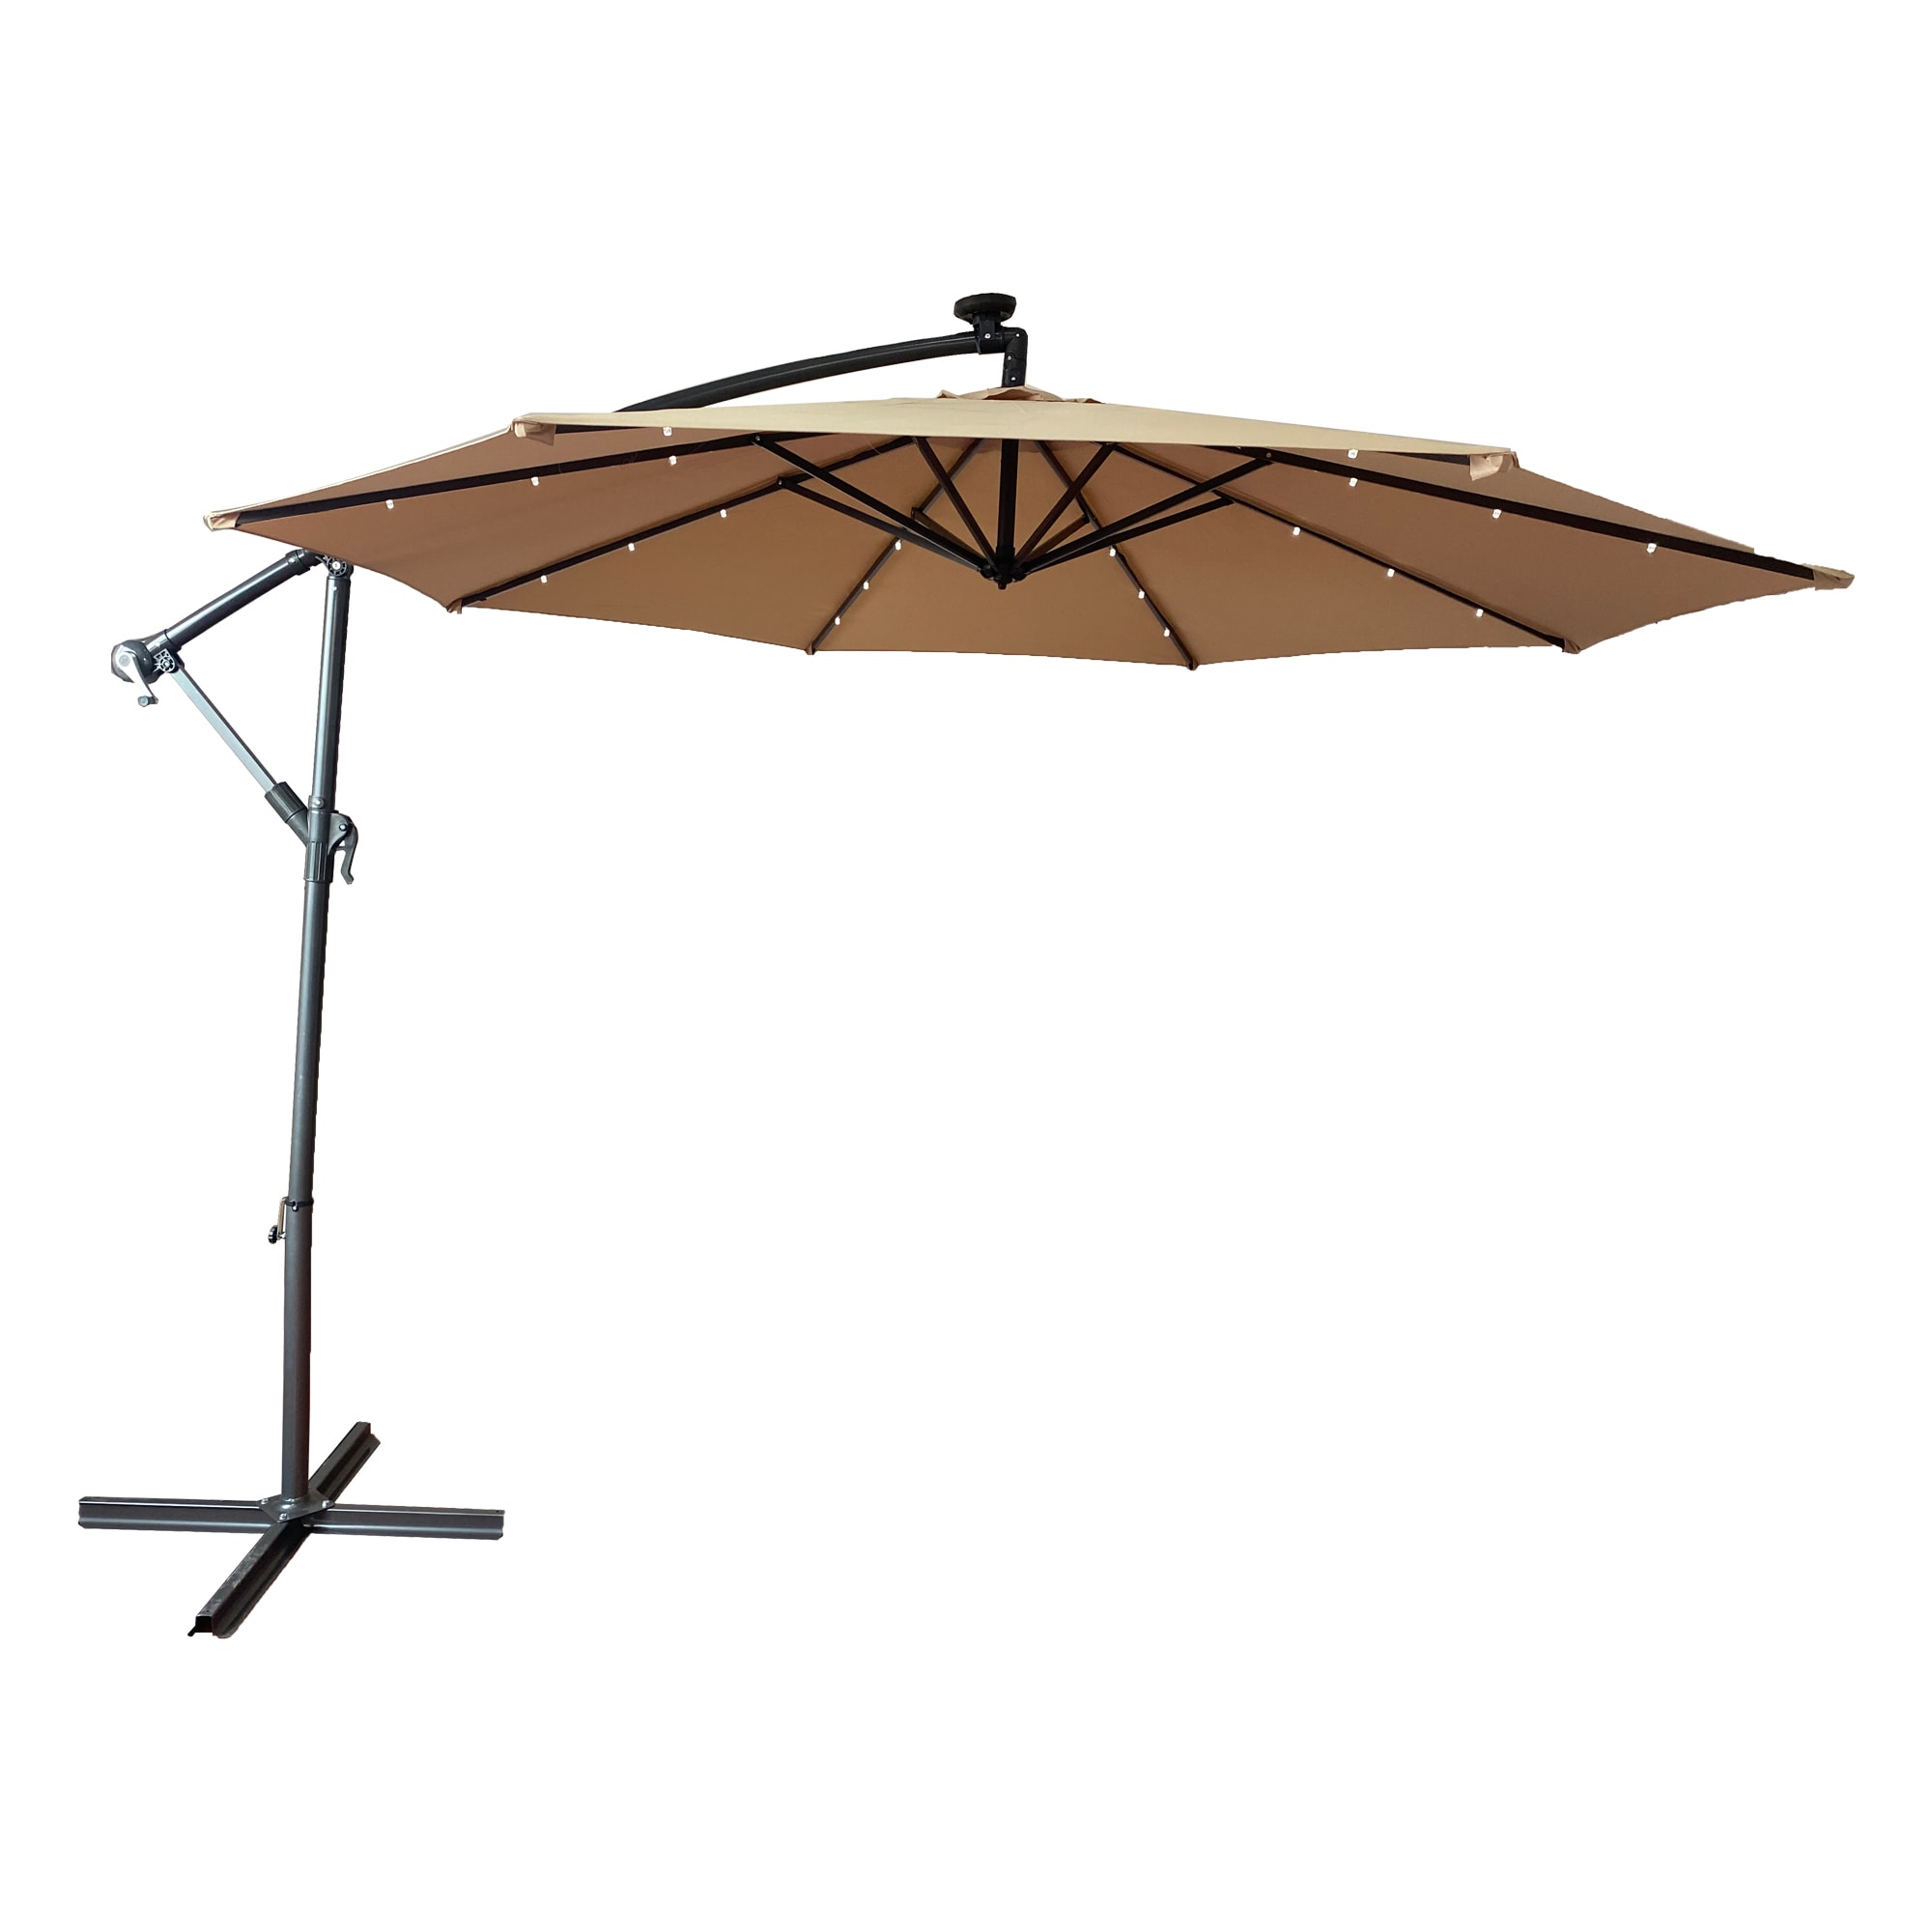 Beige 10 Round Cantilever Offset Patio Umbrella Aluminum Frame Outdoor Umbrellas with Crank Lift